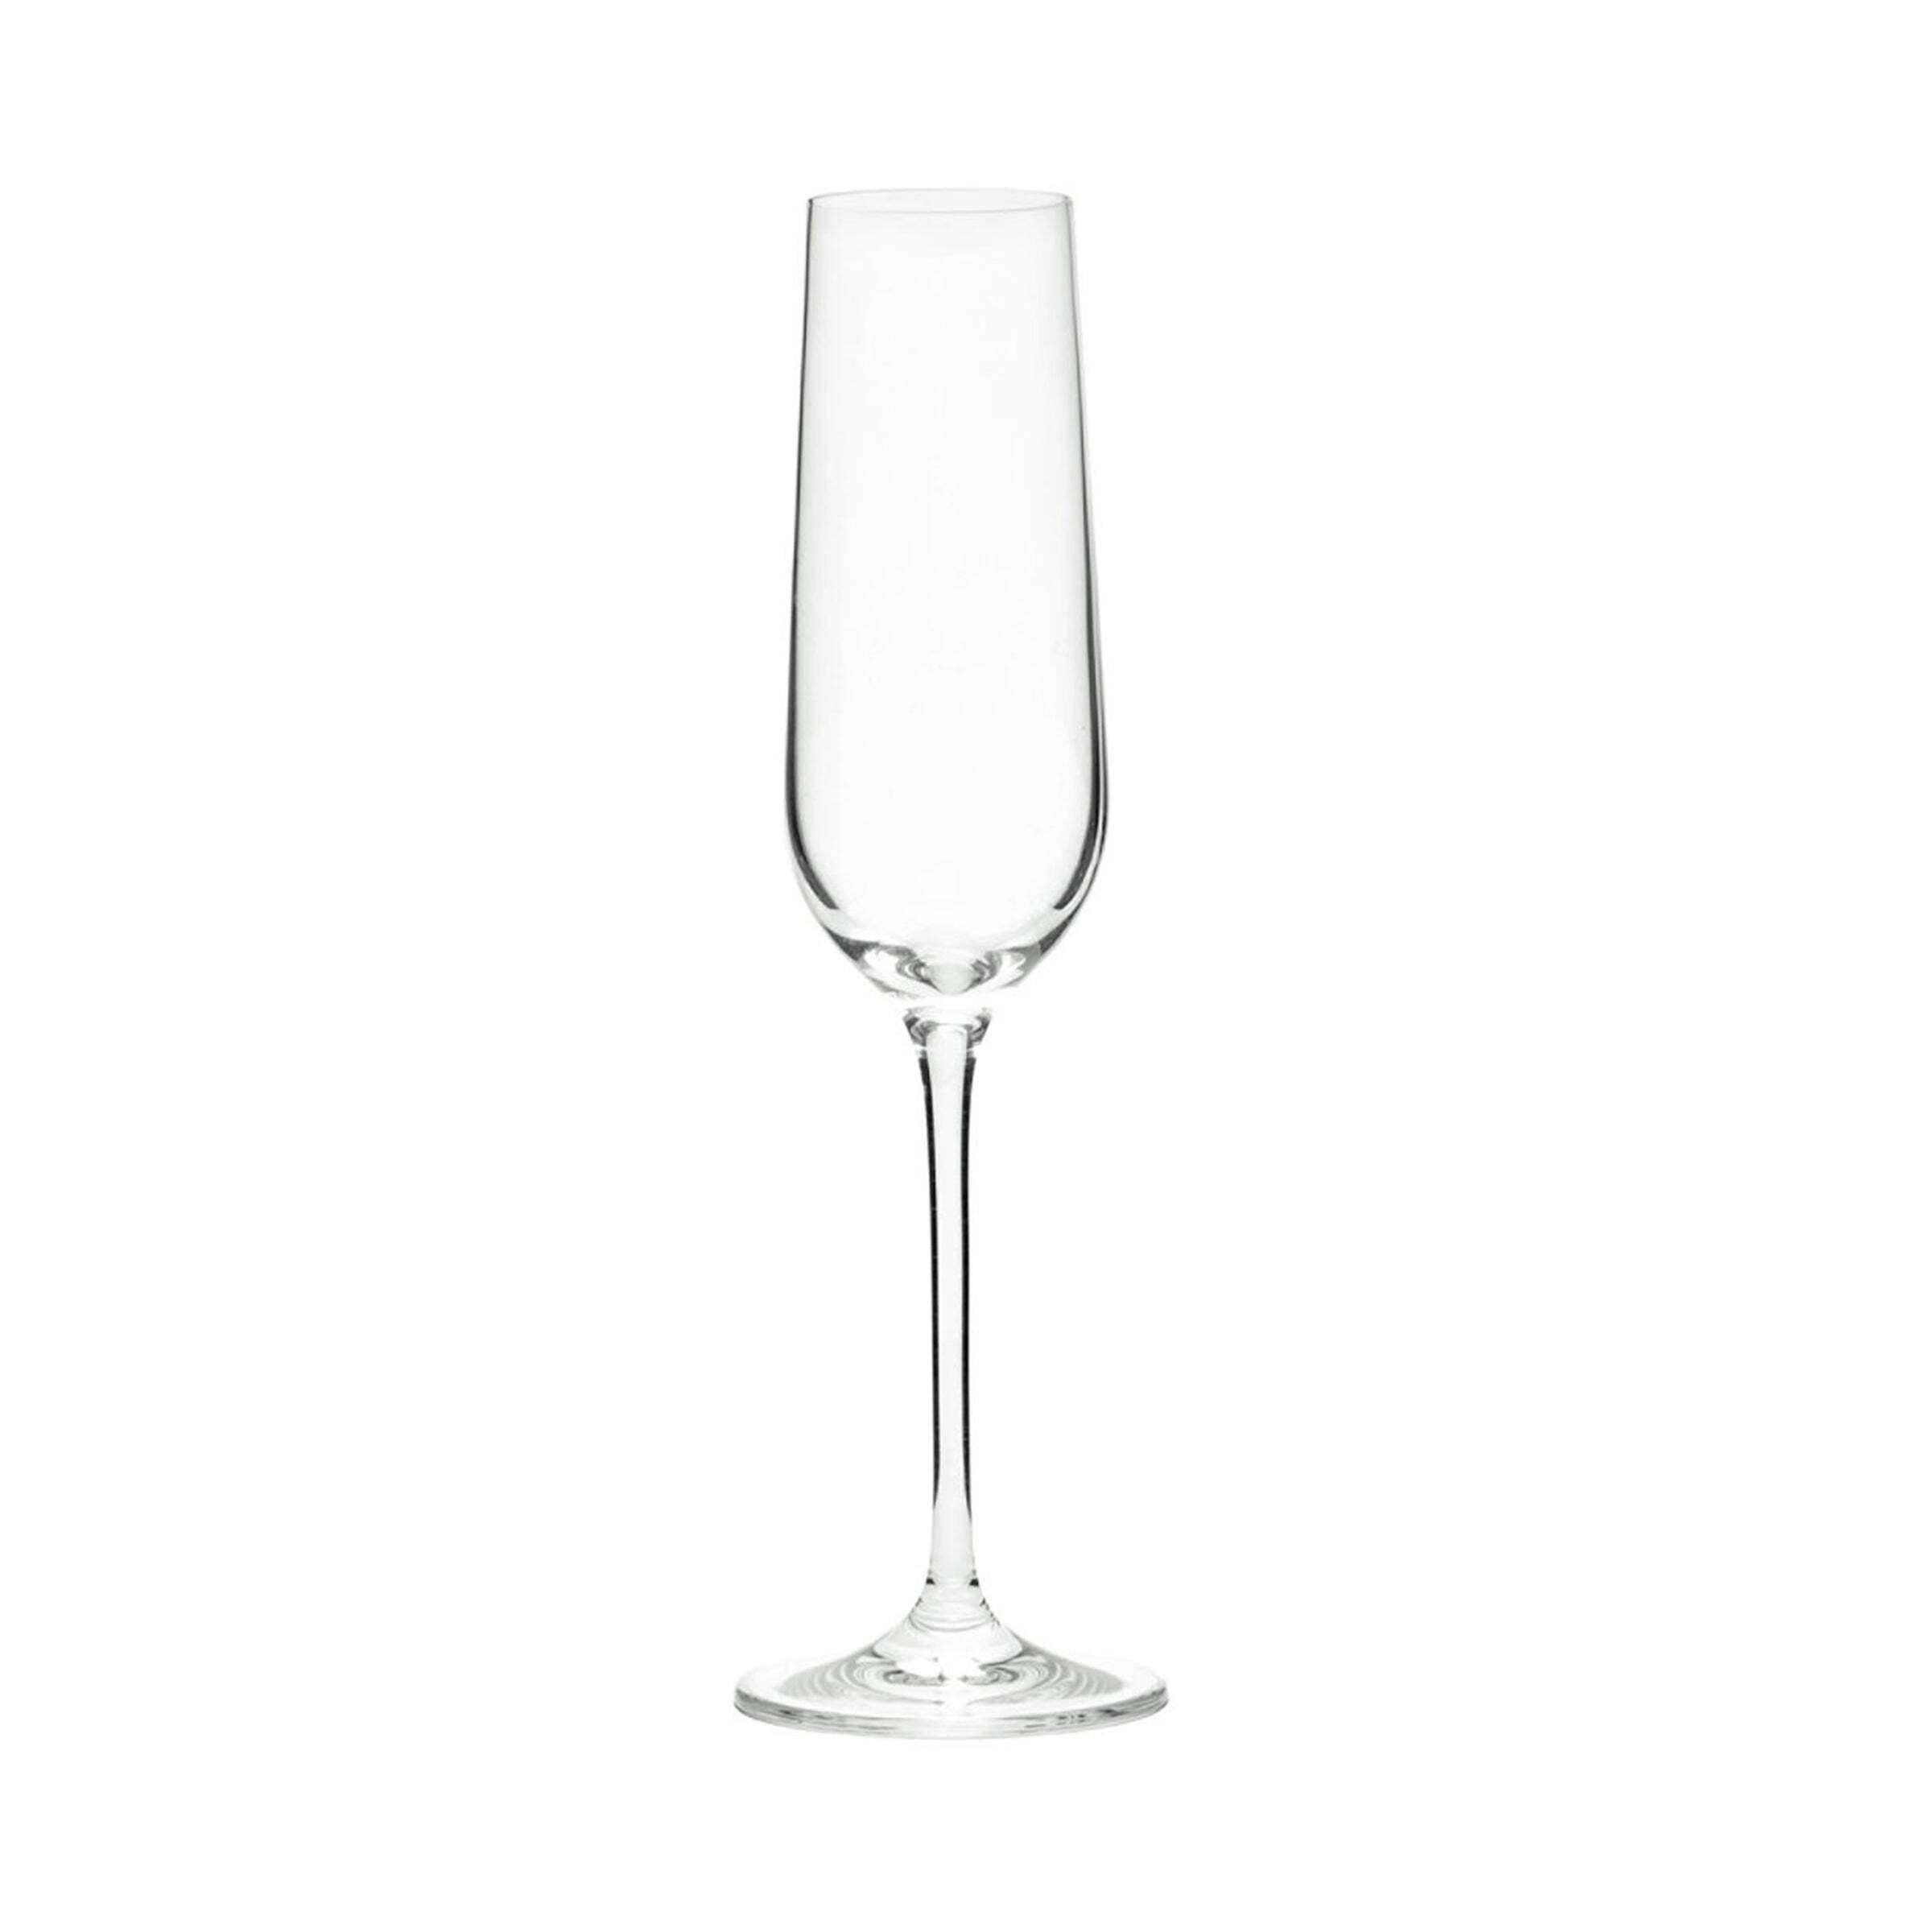 BUTLERS Champagnerglas SANTÉ Sektglas 180ml, Kristallglas